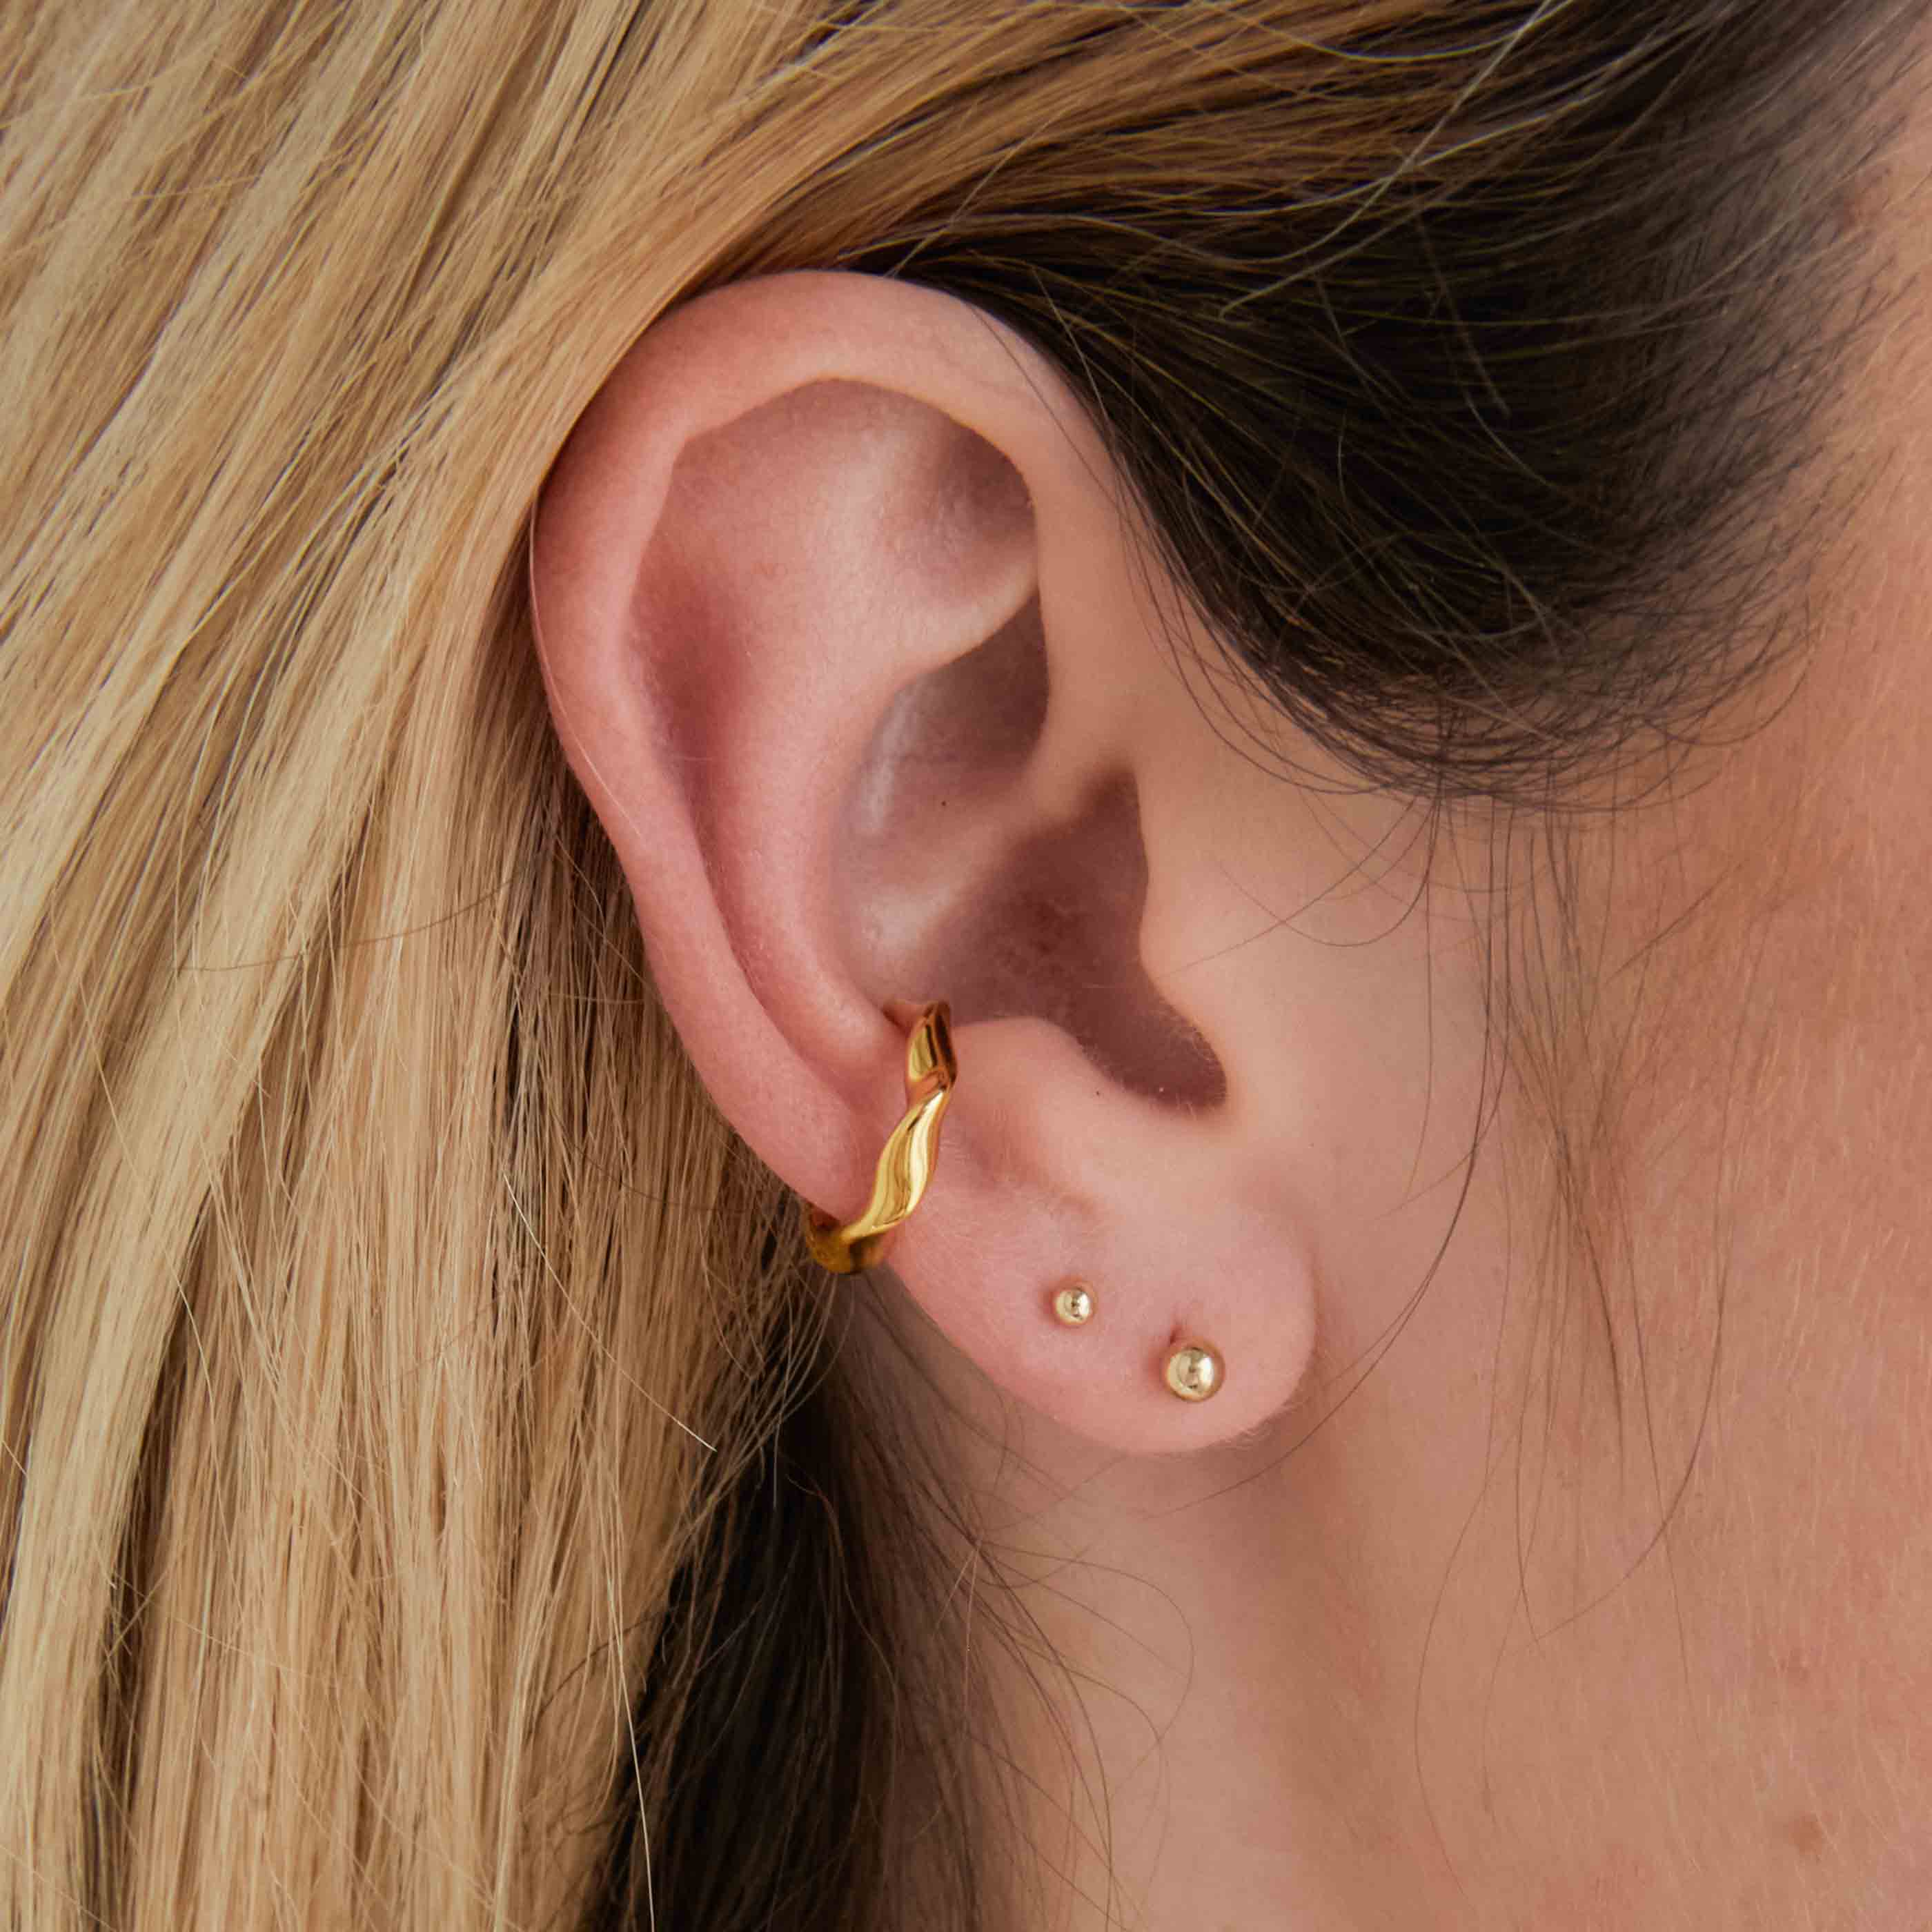 Professional Ear Piercings: Dallas, Miami, and Los Angeles LISA OM® Studio